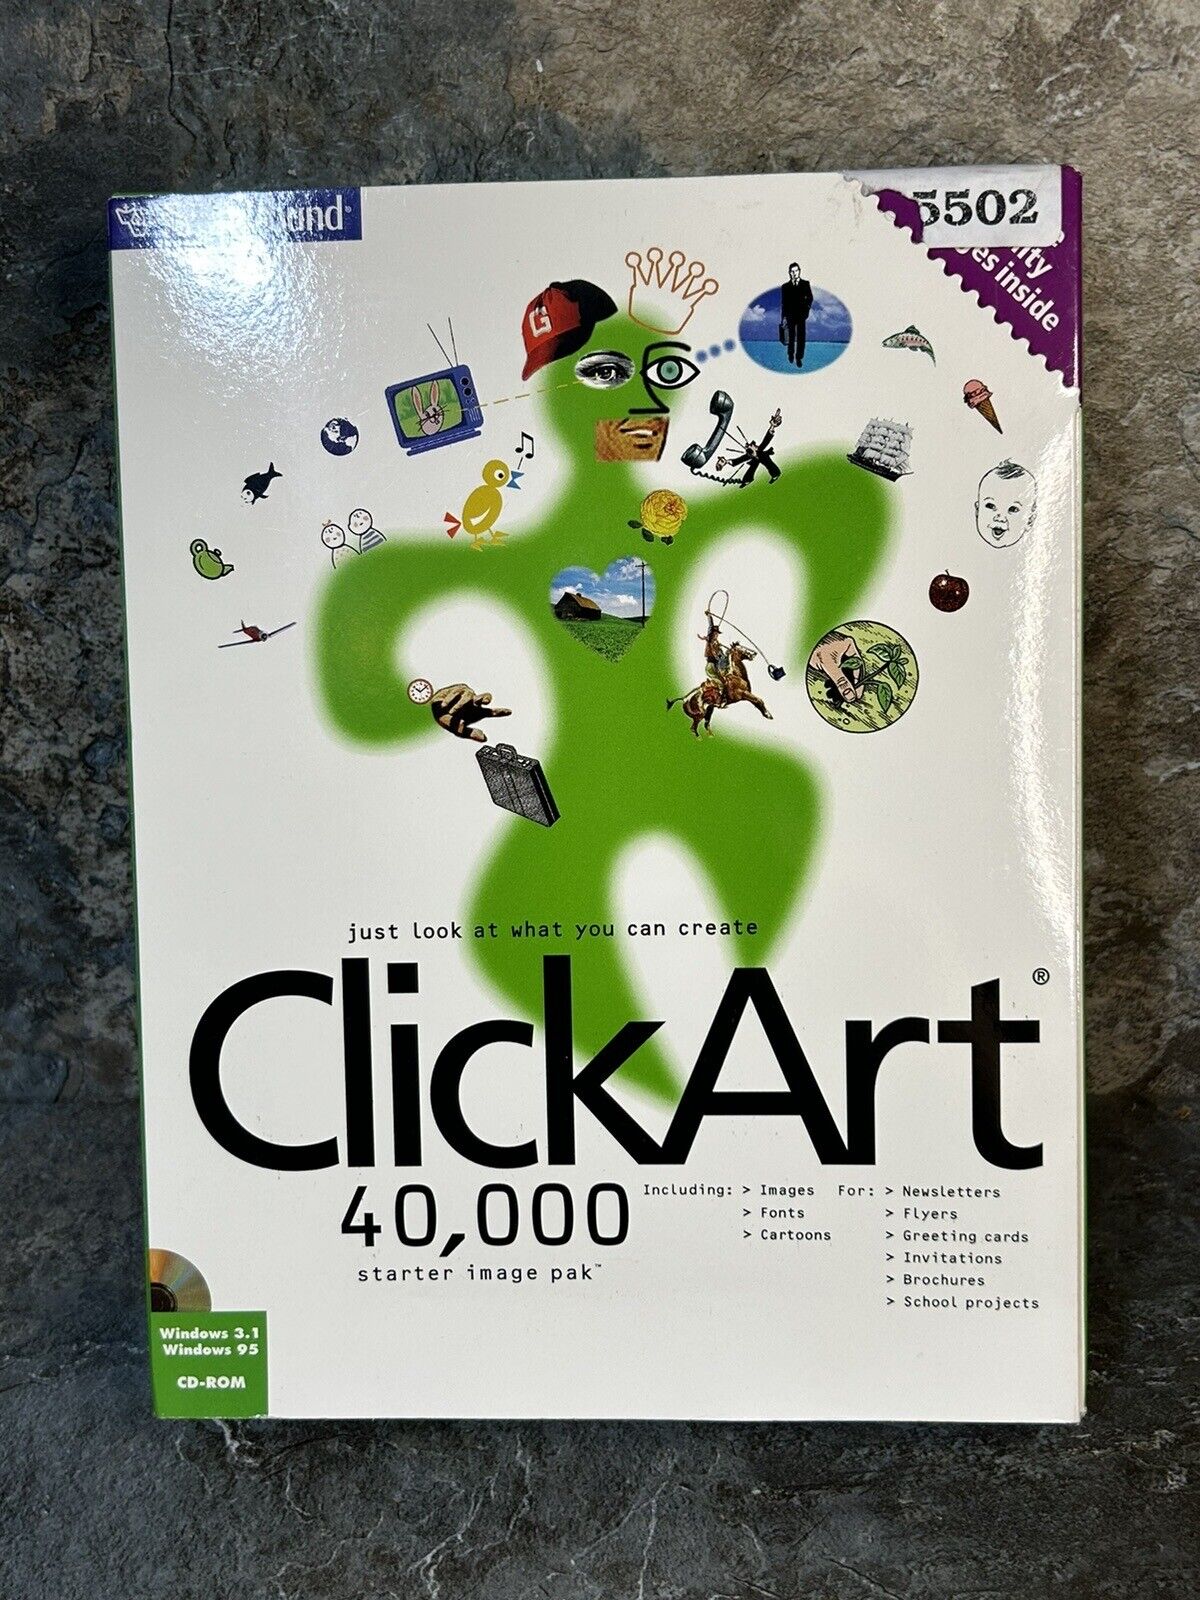 Click Art 40,000 Starter Image Pak Software 4 PC Users Guide Visual Catalog 3CDs